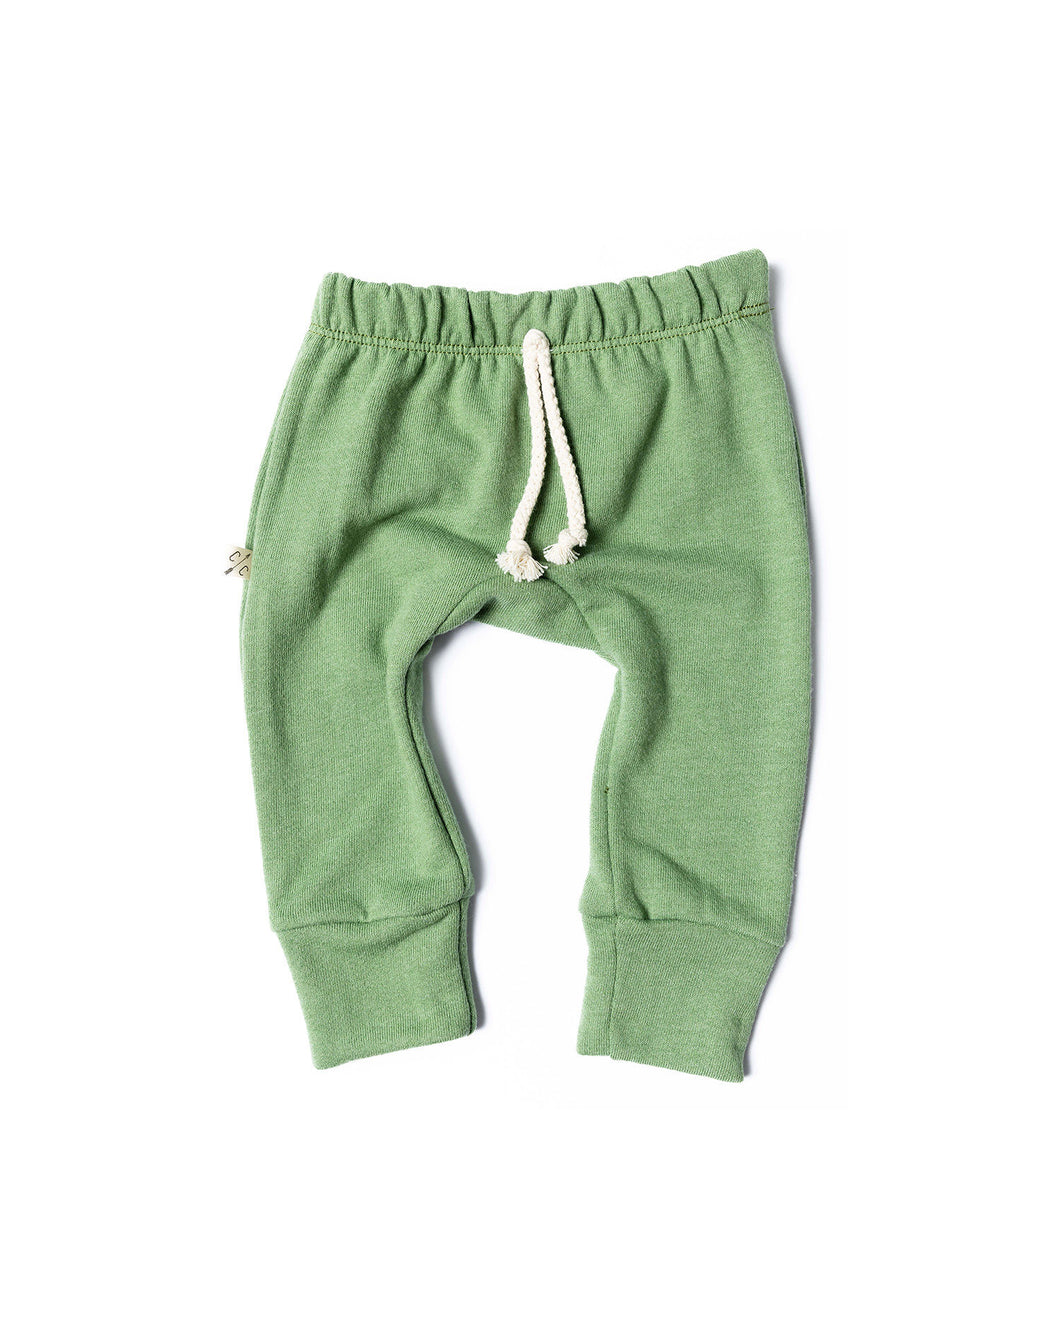 gusset pants - camp green